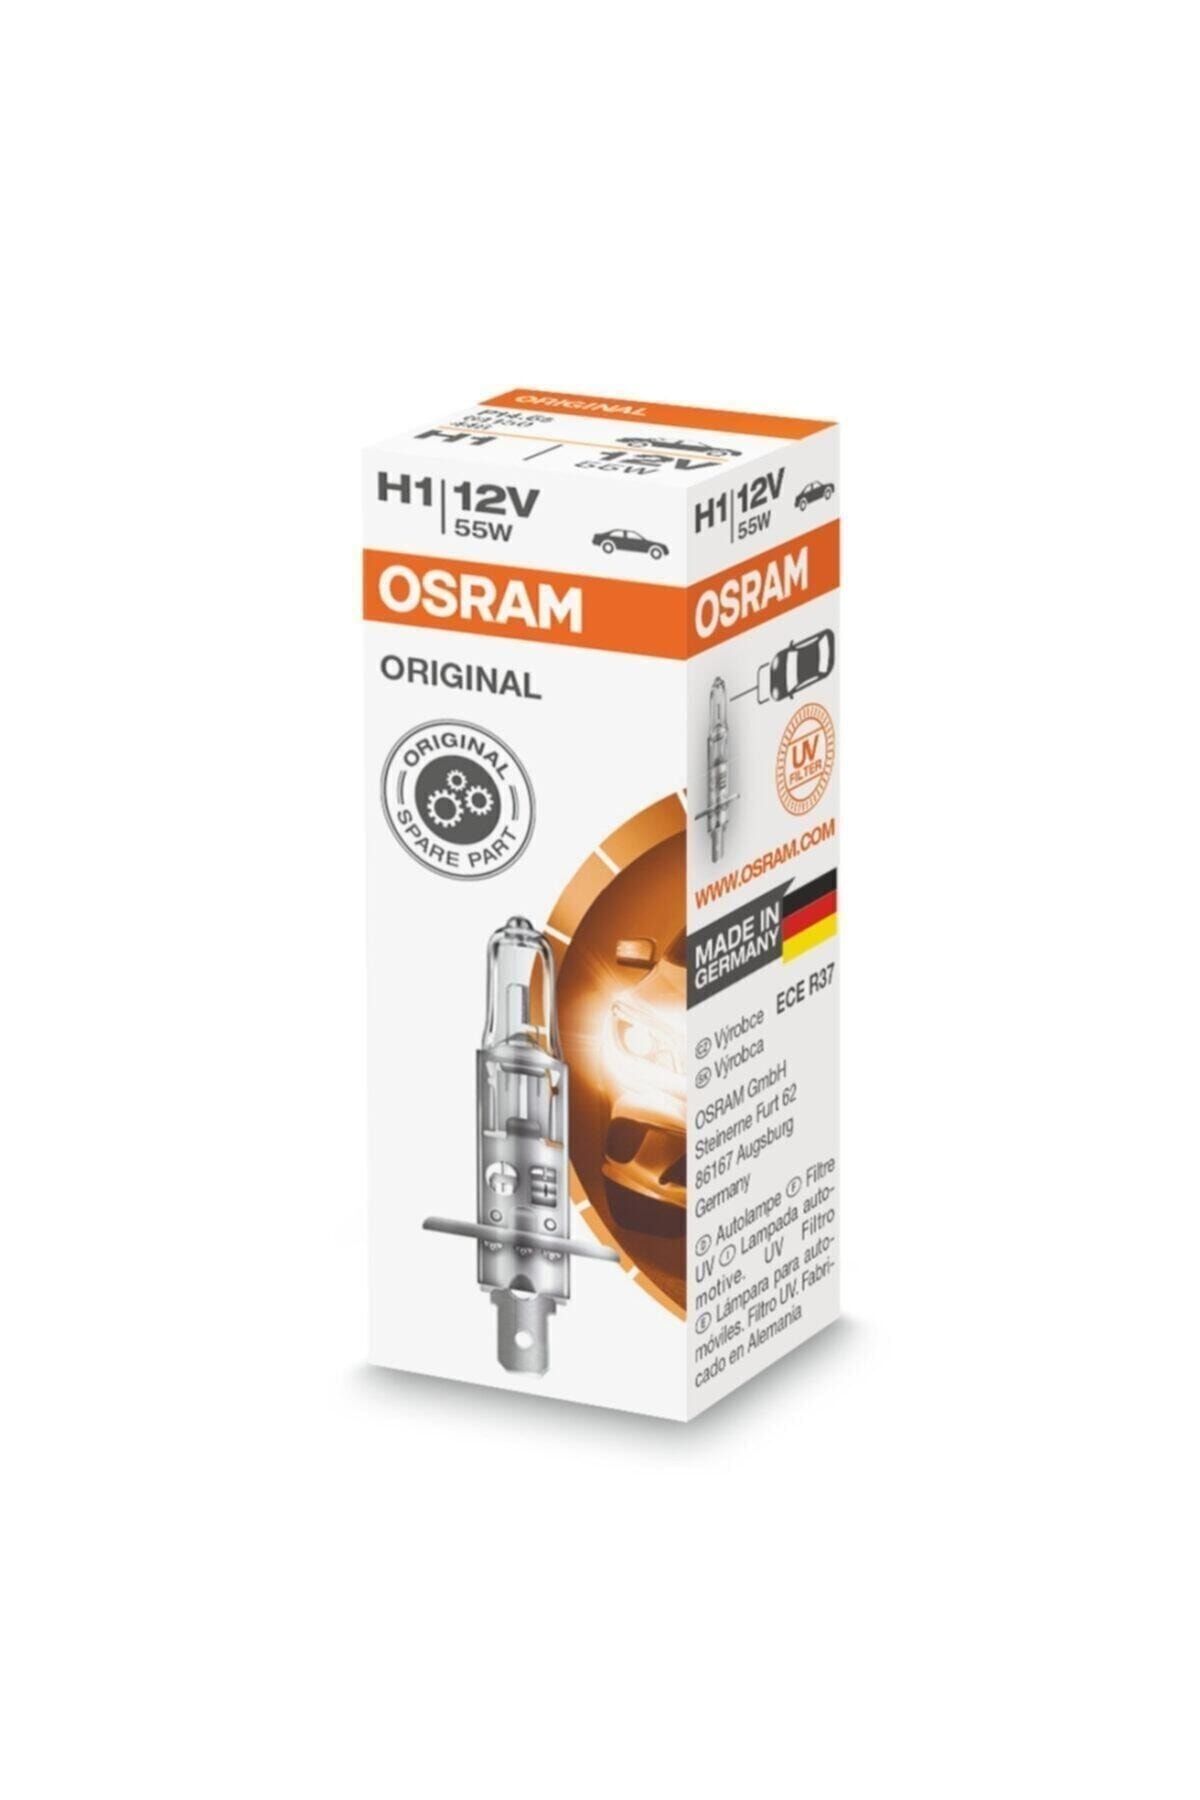 Osram Holajen Ampul H1 12v 55w Fiyatı, Yorumları - Trendyol